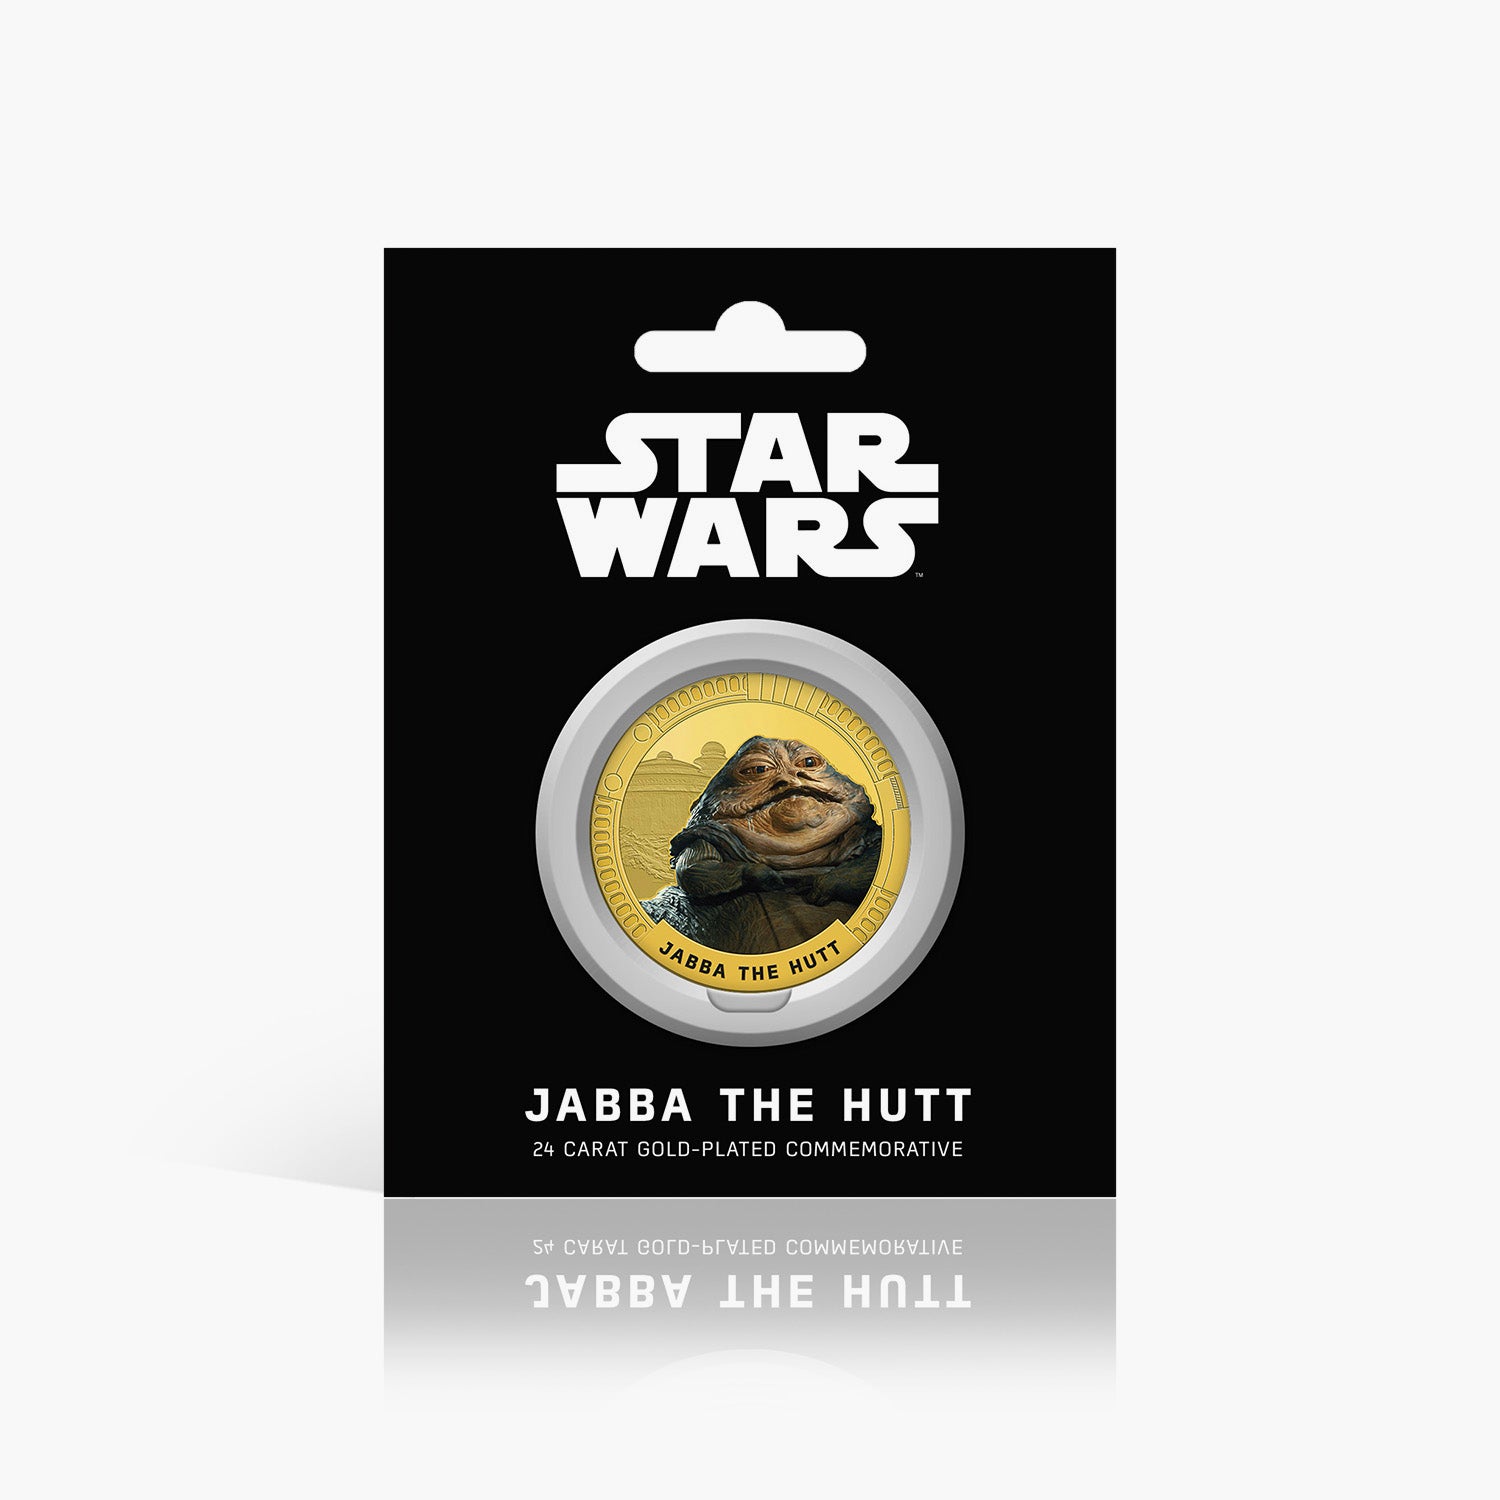 Jabba The Hutt Gold - Plated Commemorative